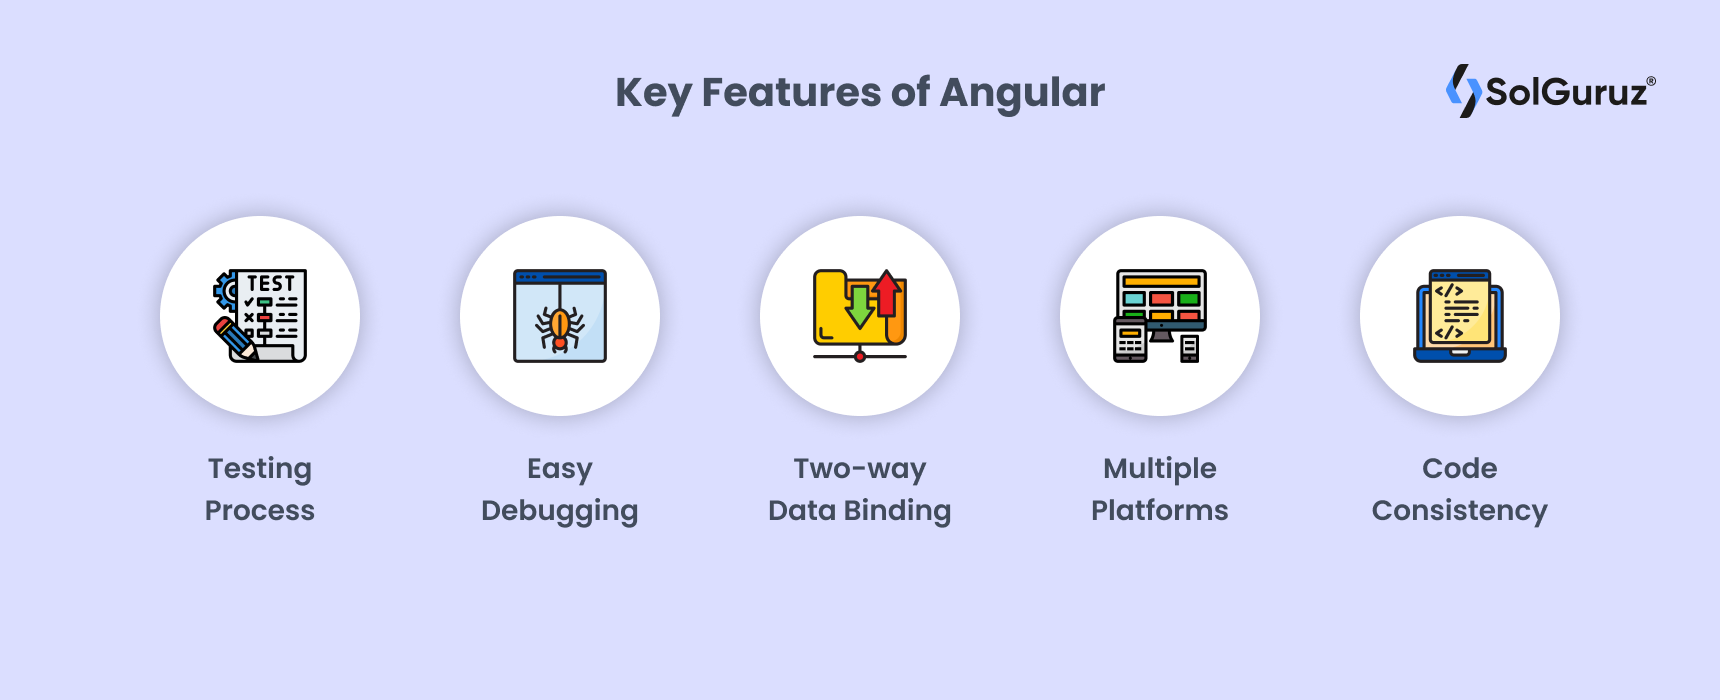 SolGuruz - Key Features of Angular